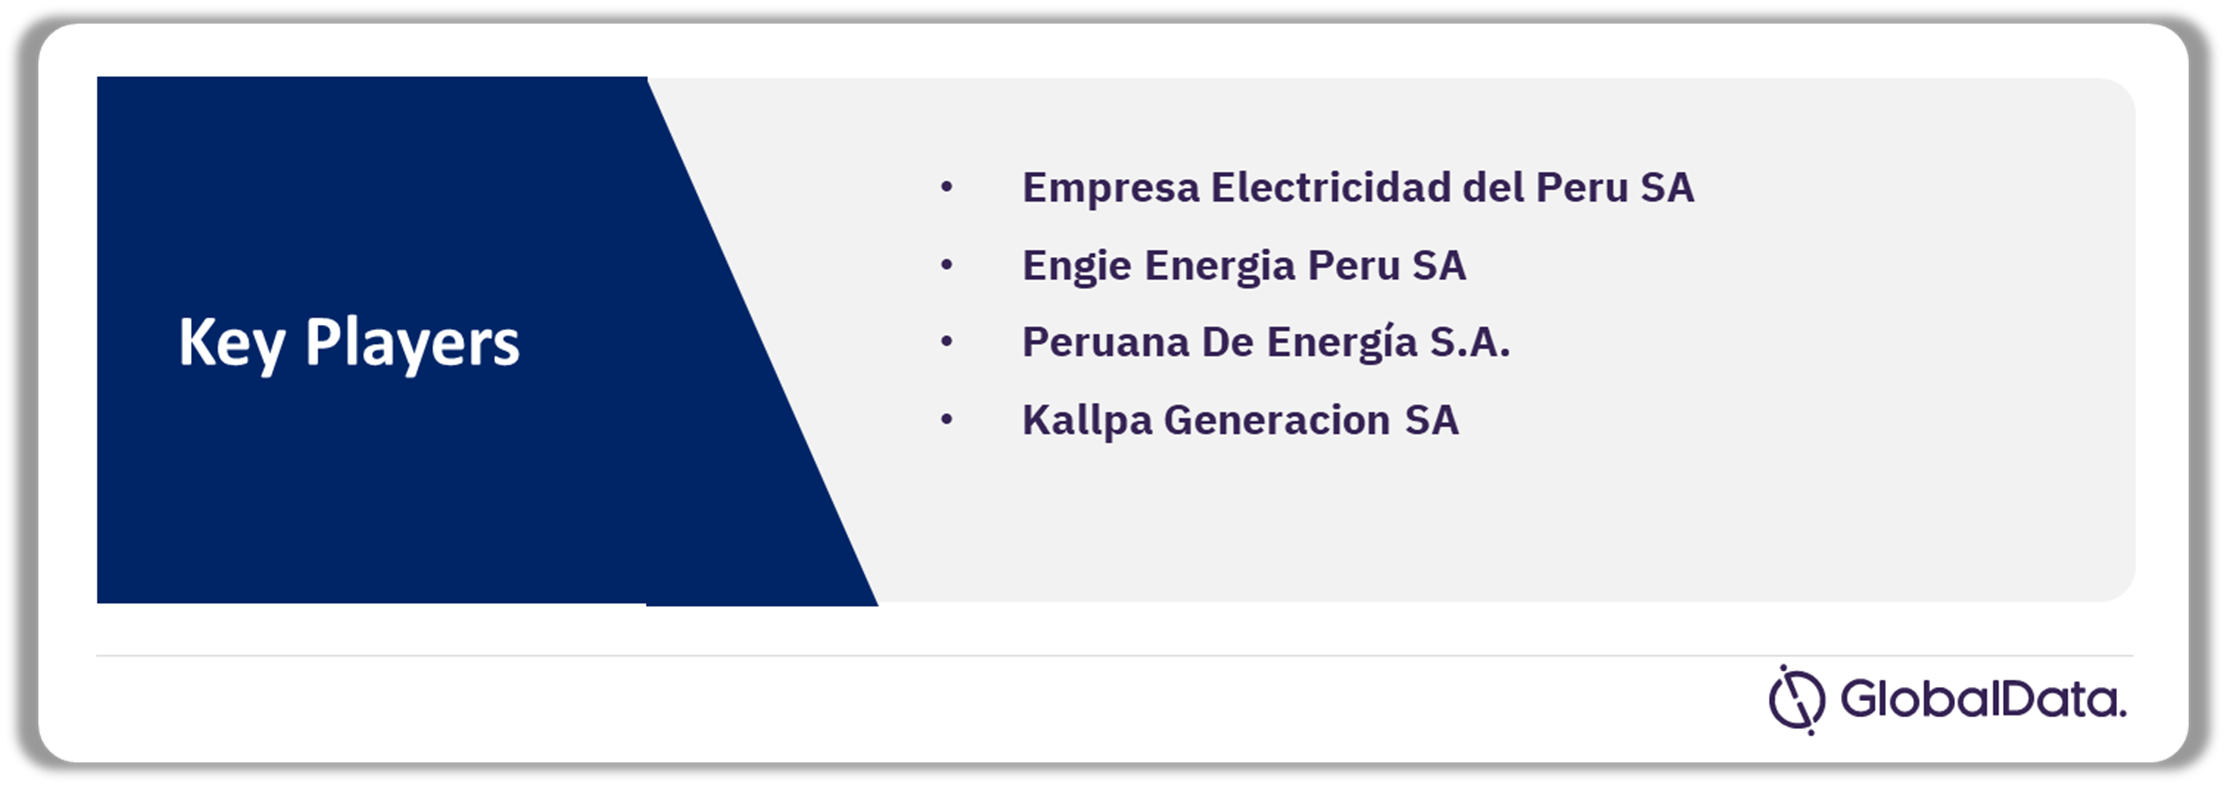 Peru Hydropower Market Analysis by Companies